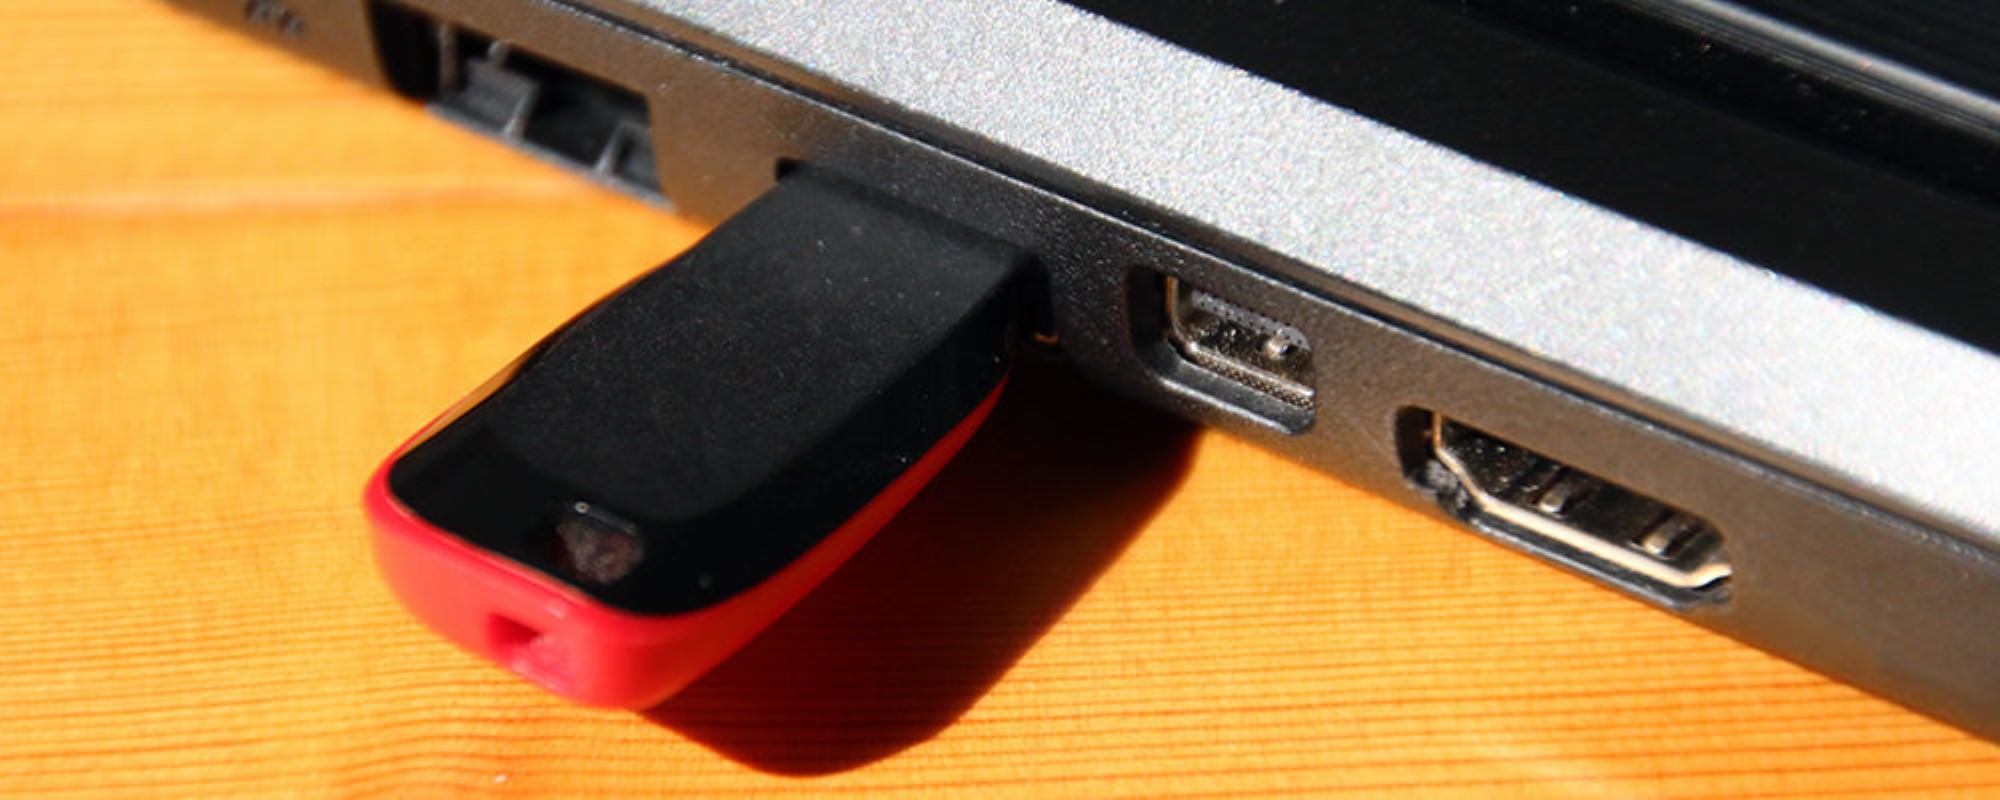 Betriebssystem Image auf USB-Stick